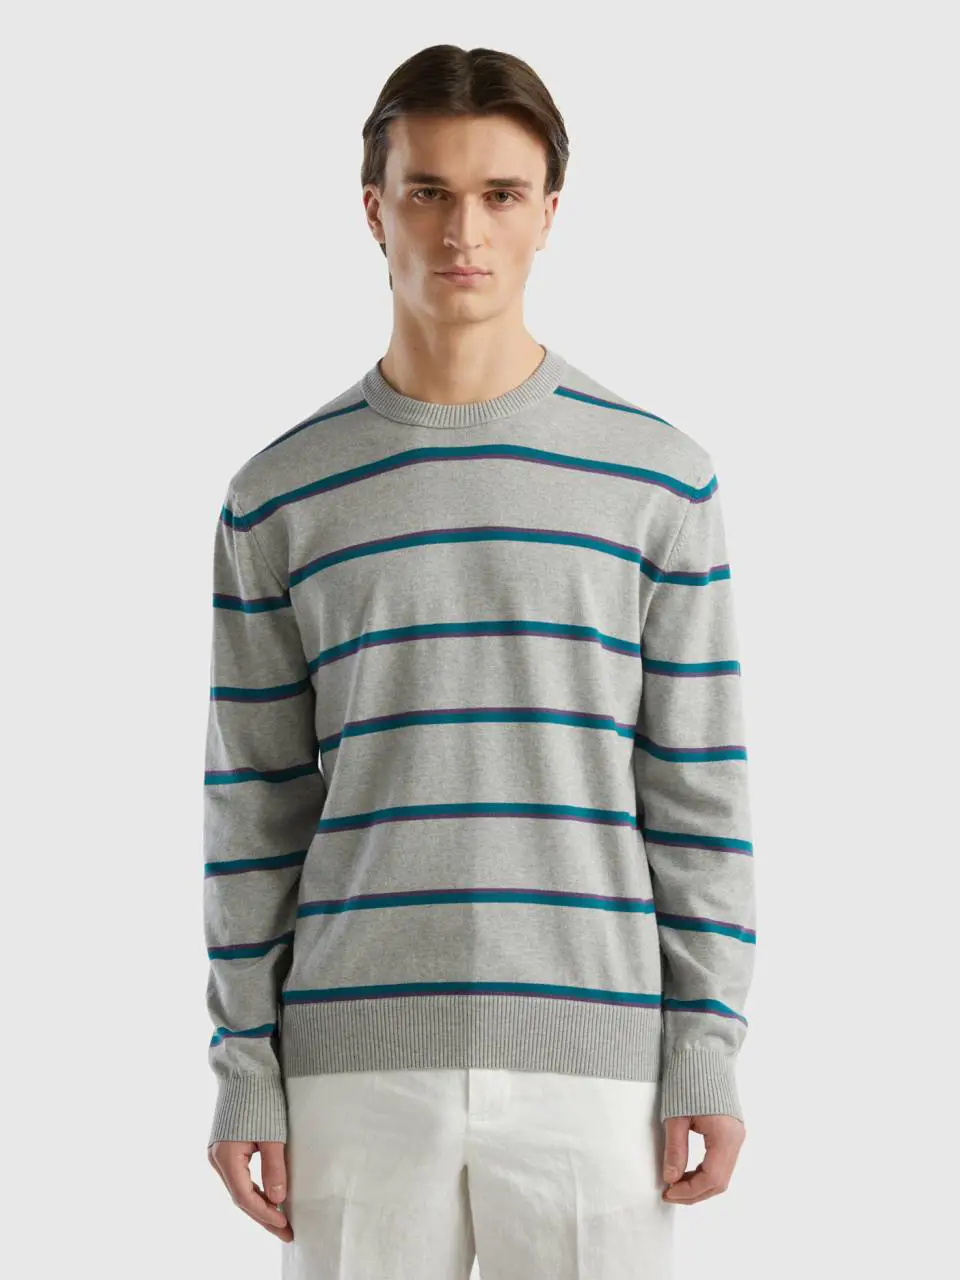 Benetton striped 100% cotton sweater. 1